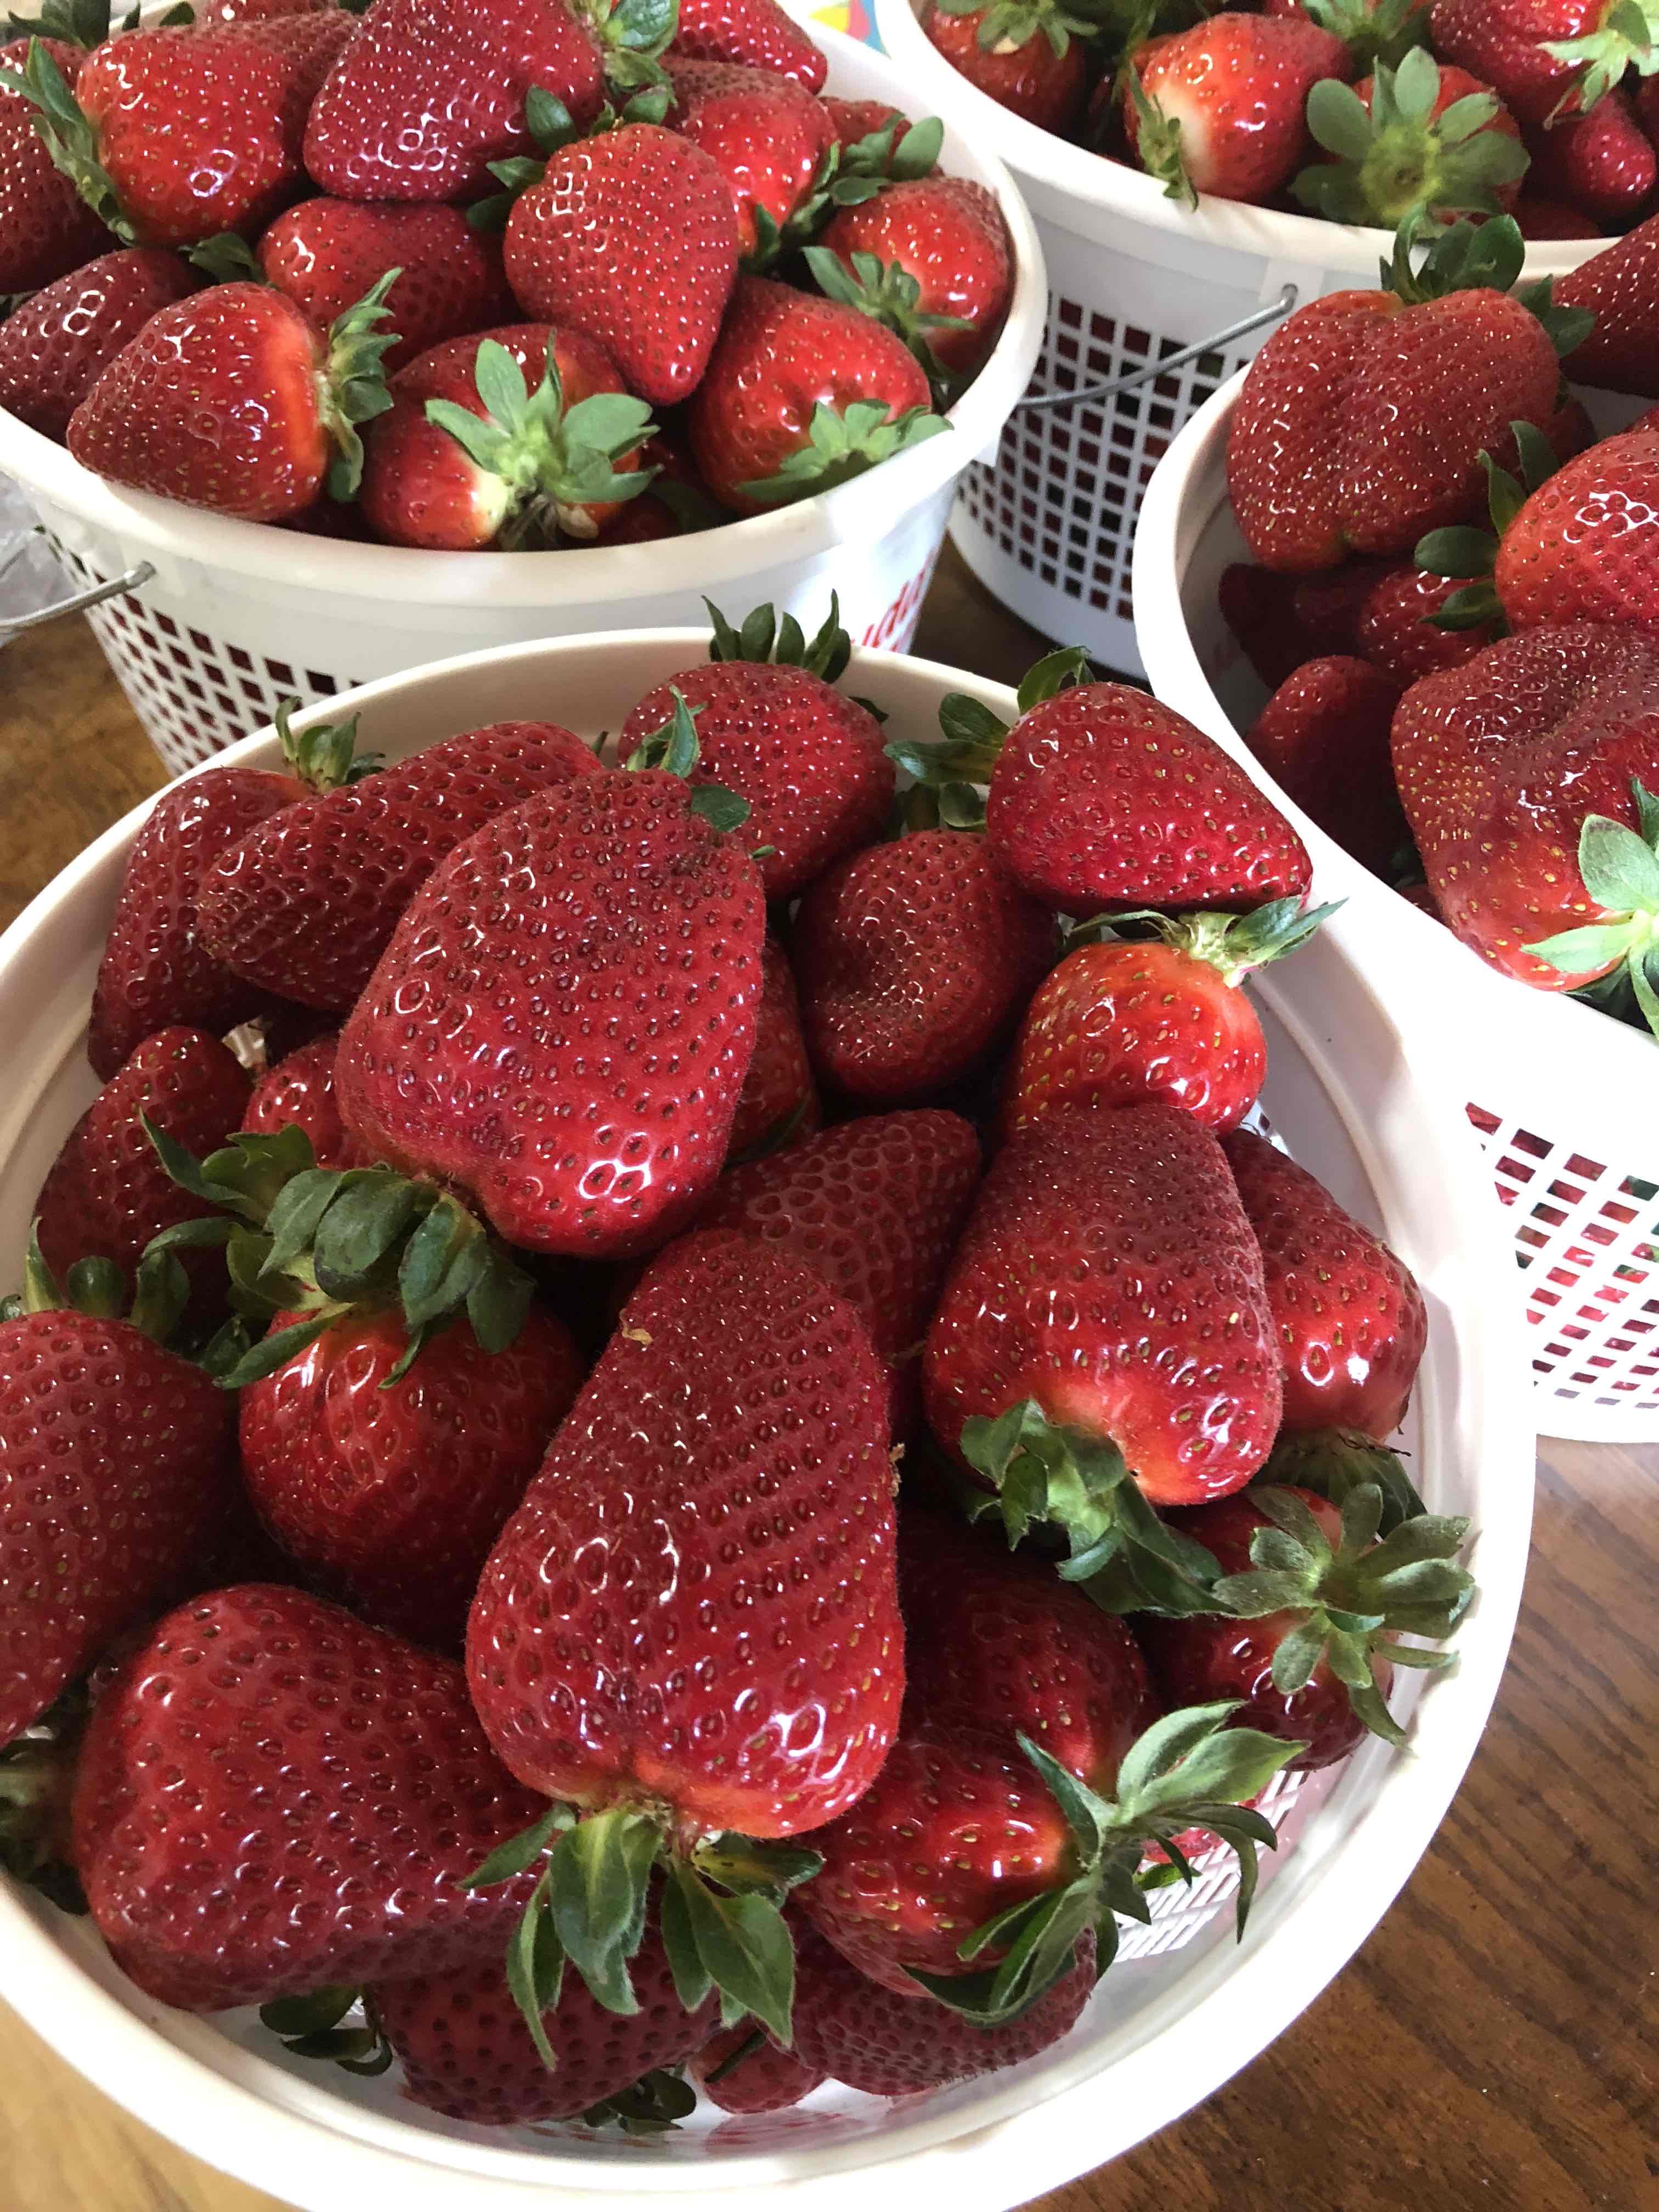 Ruby Jane strawberries in buckets